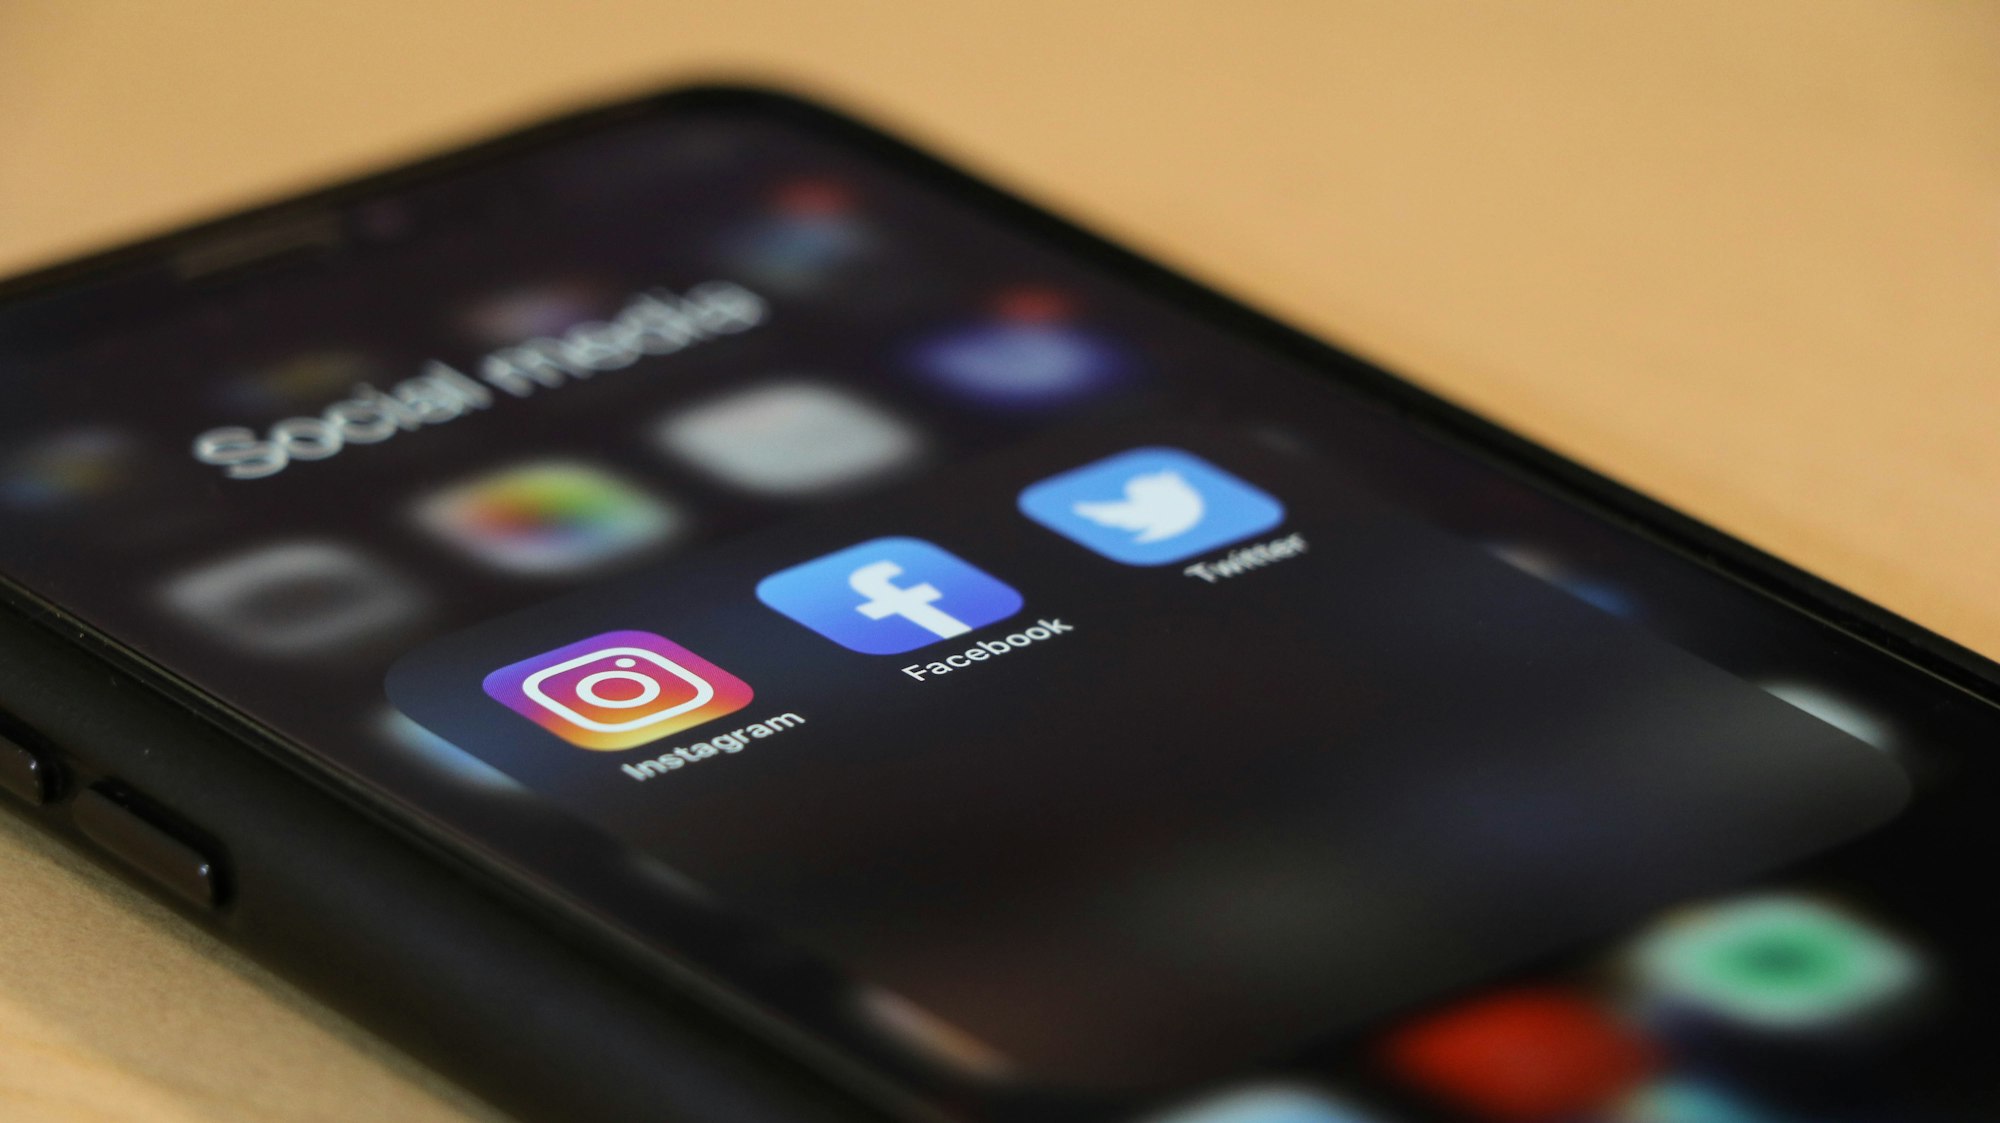 Smartphone showing social media apps: Instagram, Facebook, Twitter